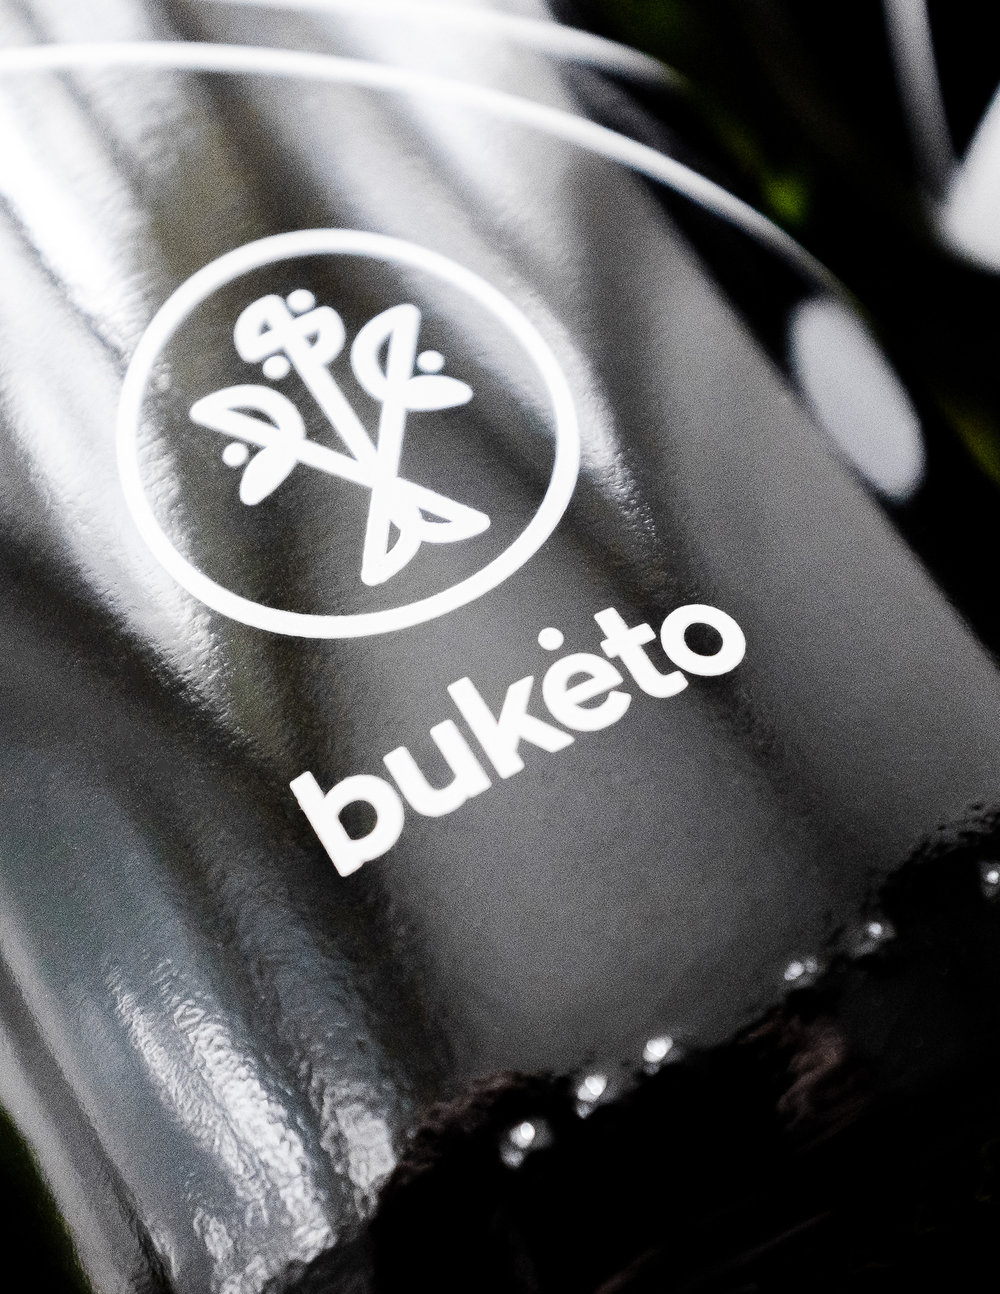 Buketo wine bottle design by Lazy snail Design